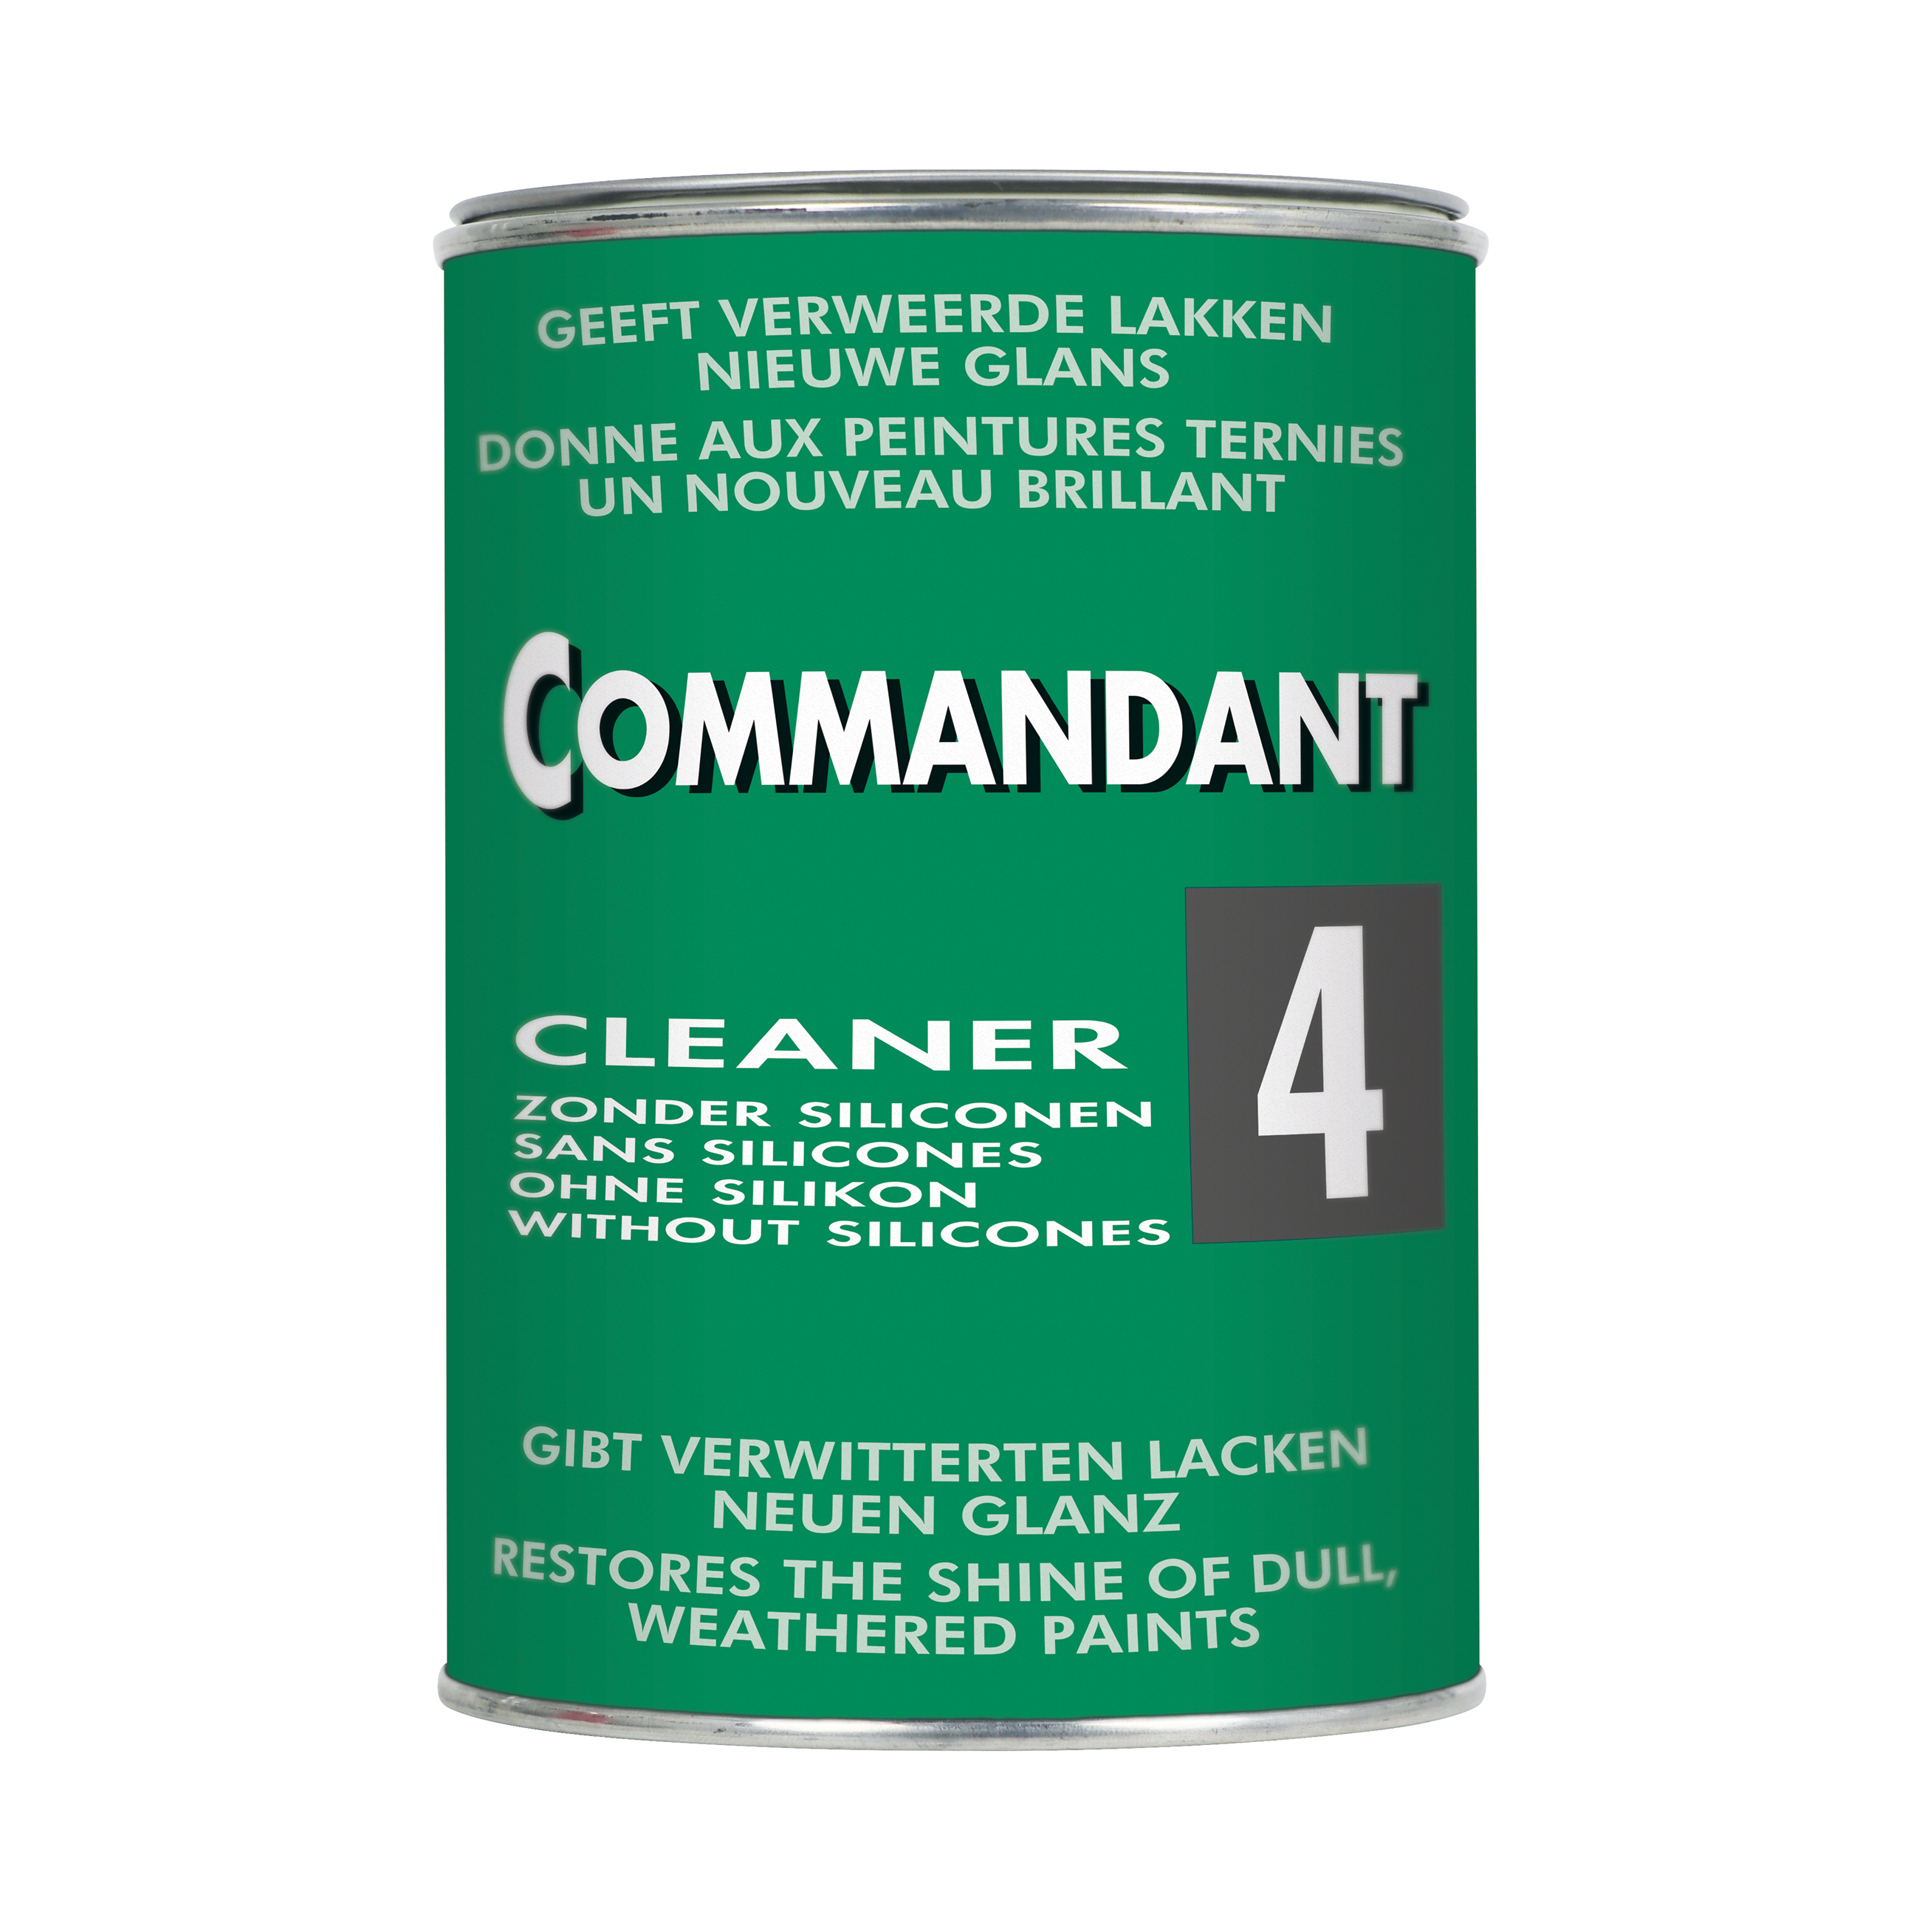 Commandant Commandant Cleaner 4 1kg 1830597